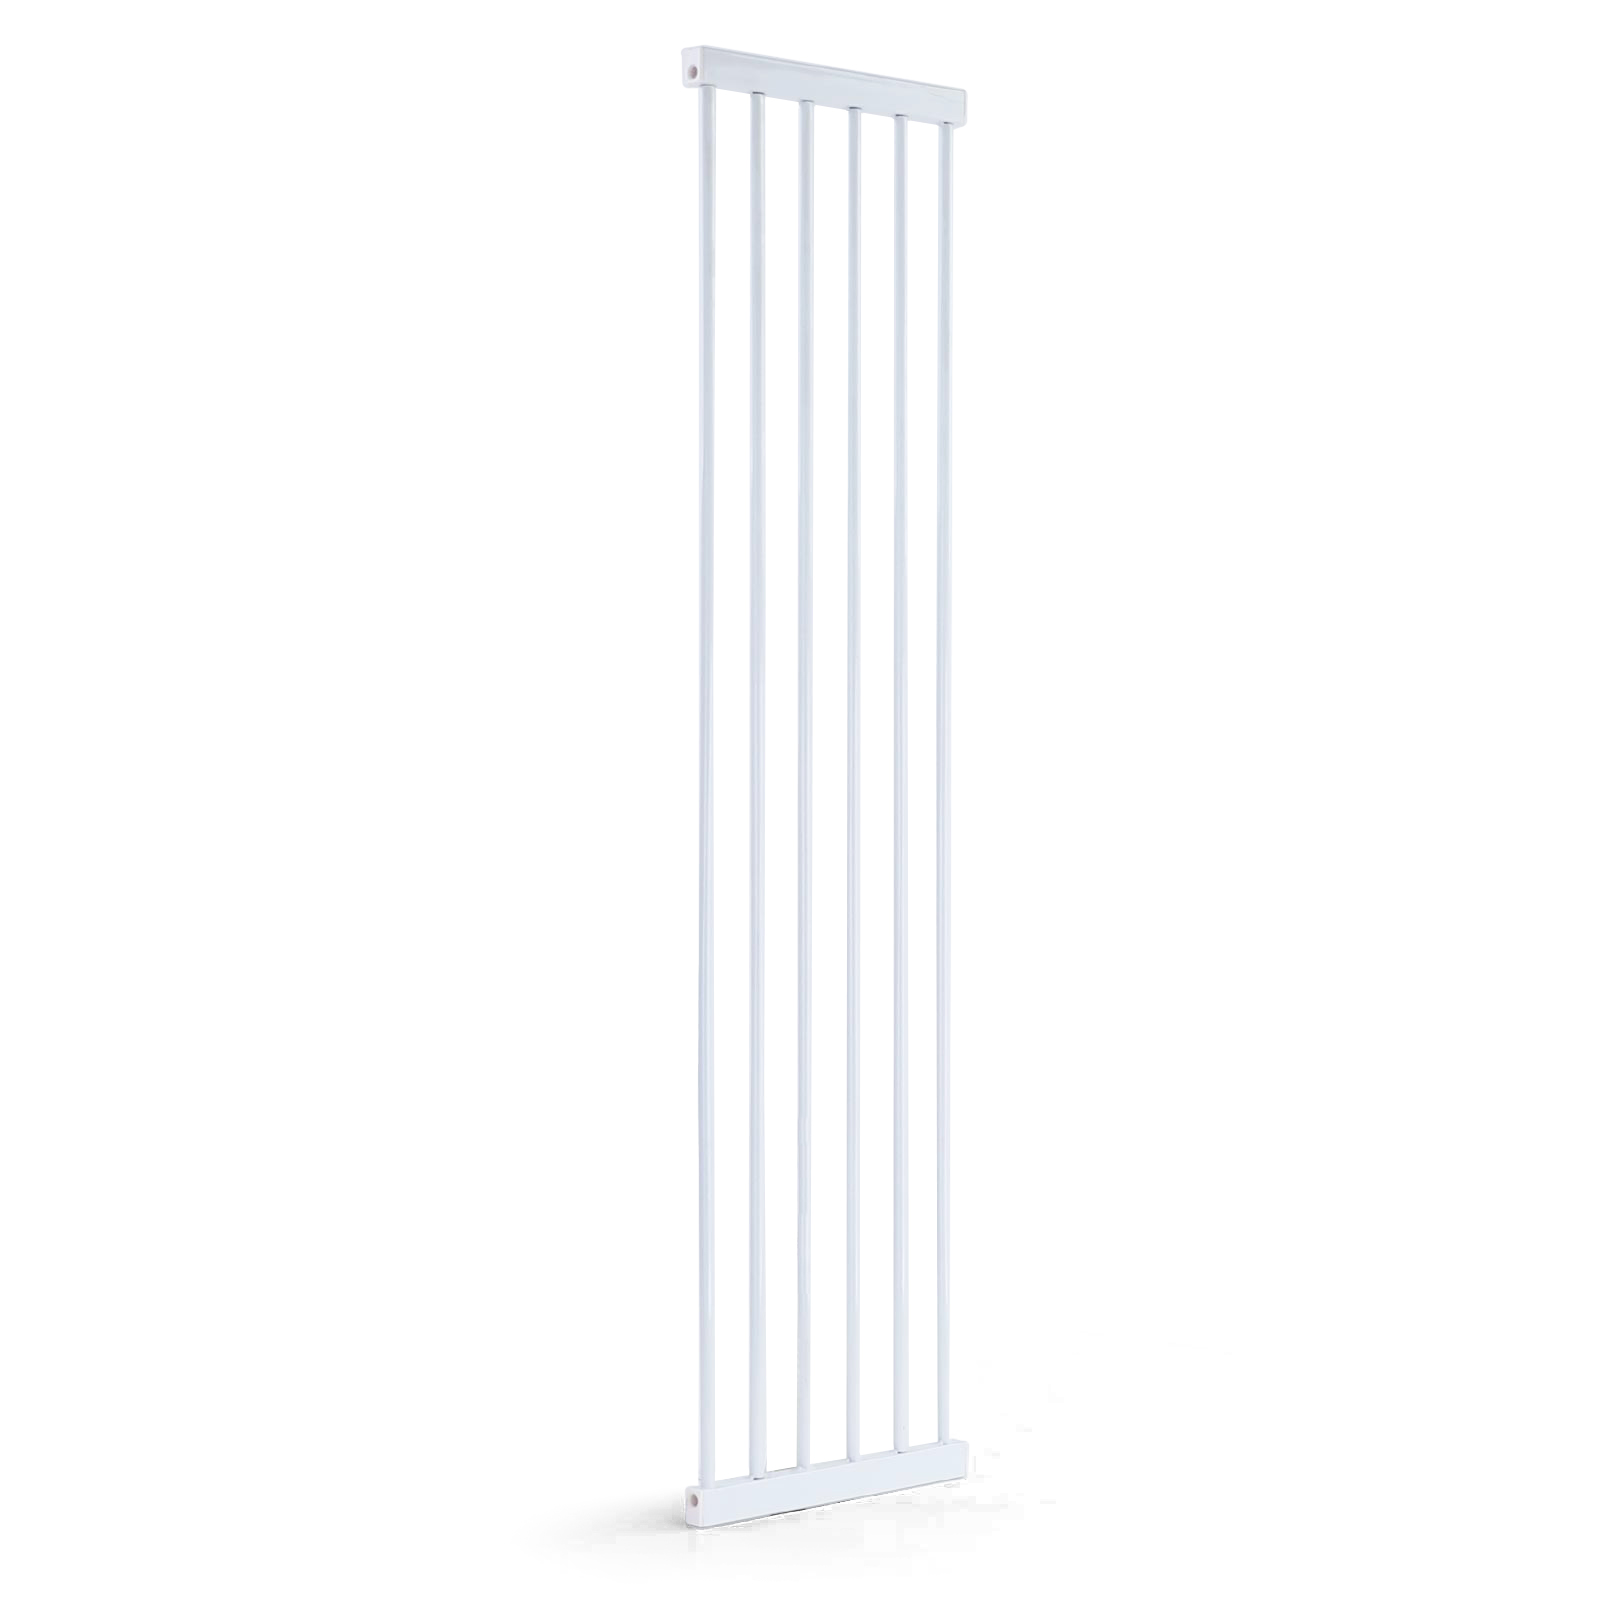 Absperrgitter Treppenschutzgitter Metall weiß verstellbar 80-93cm 77cm hoch 